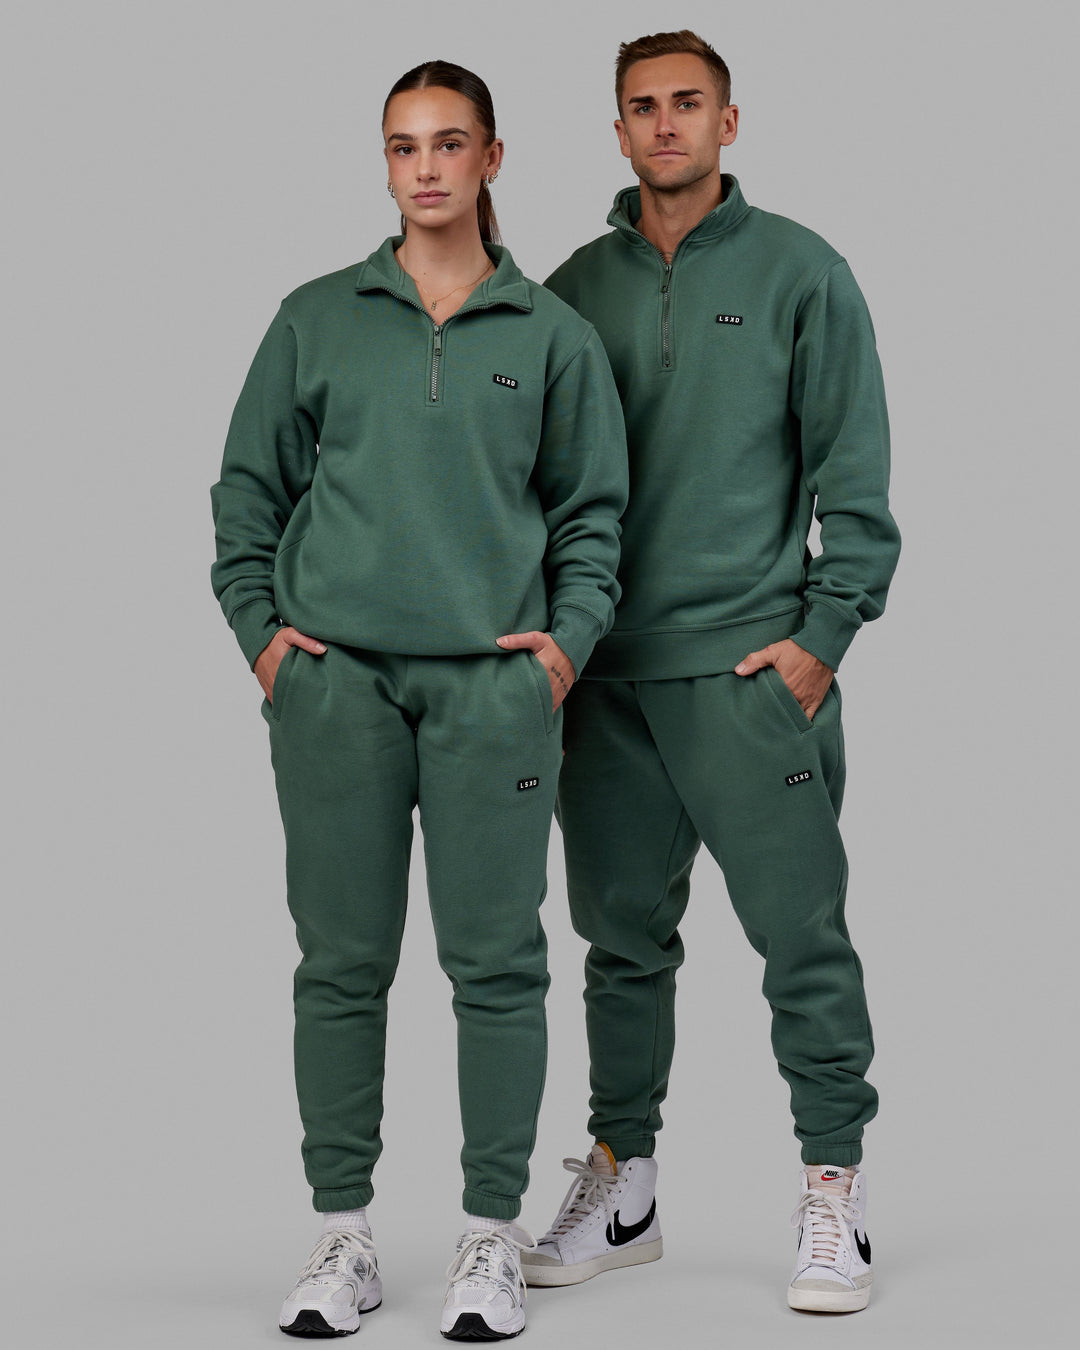 Duo wearing Unisex Fundamental 1/4 Zip Sweater - Dark Forest